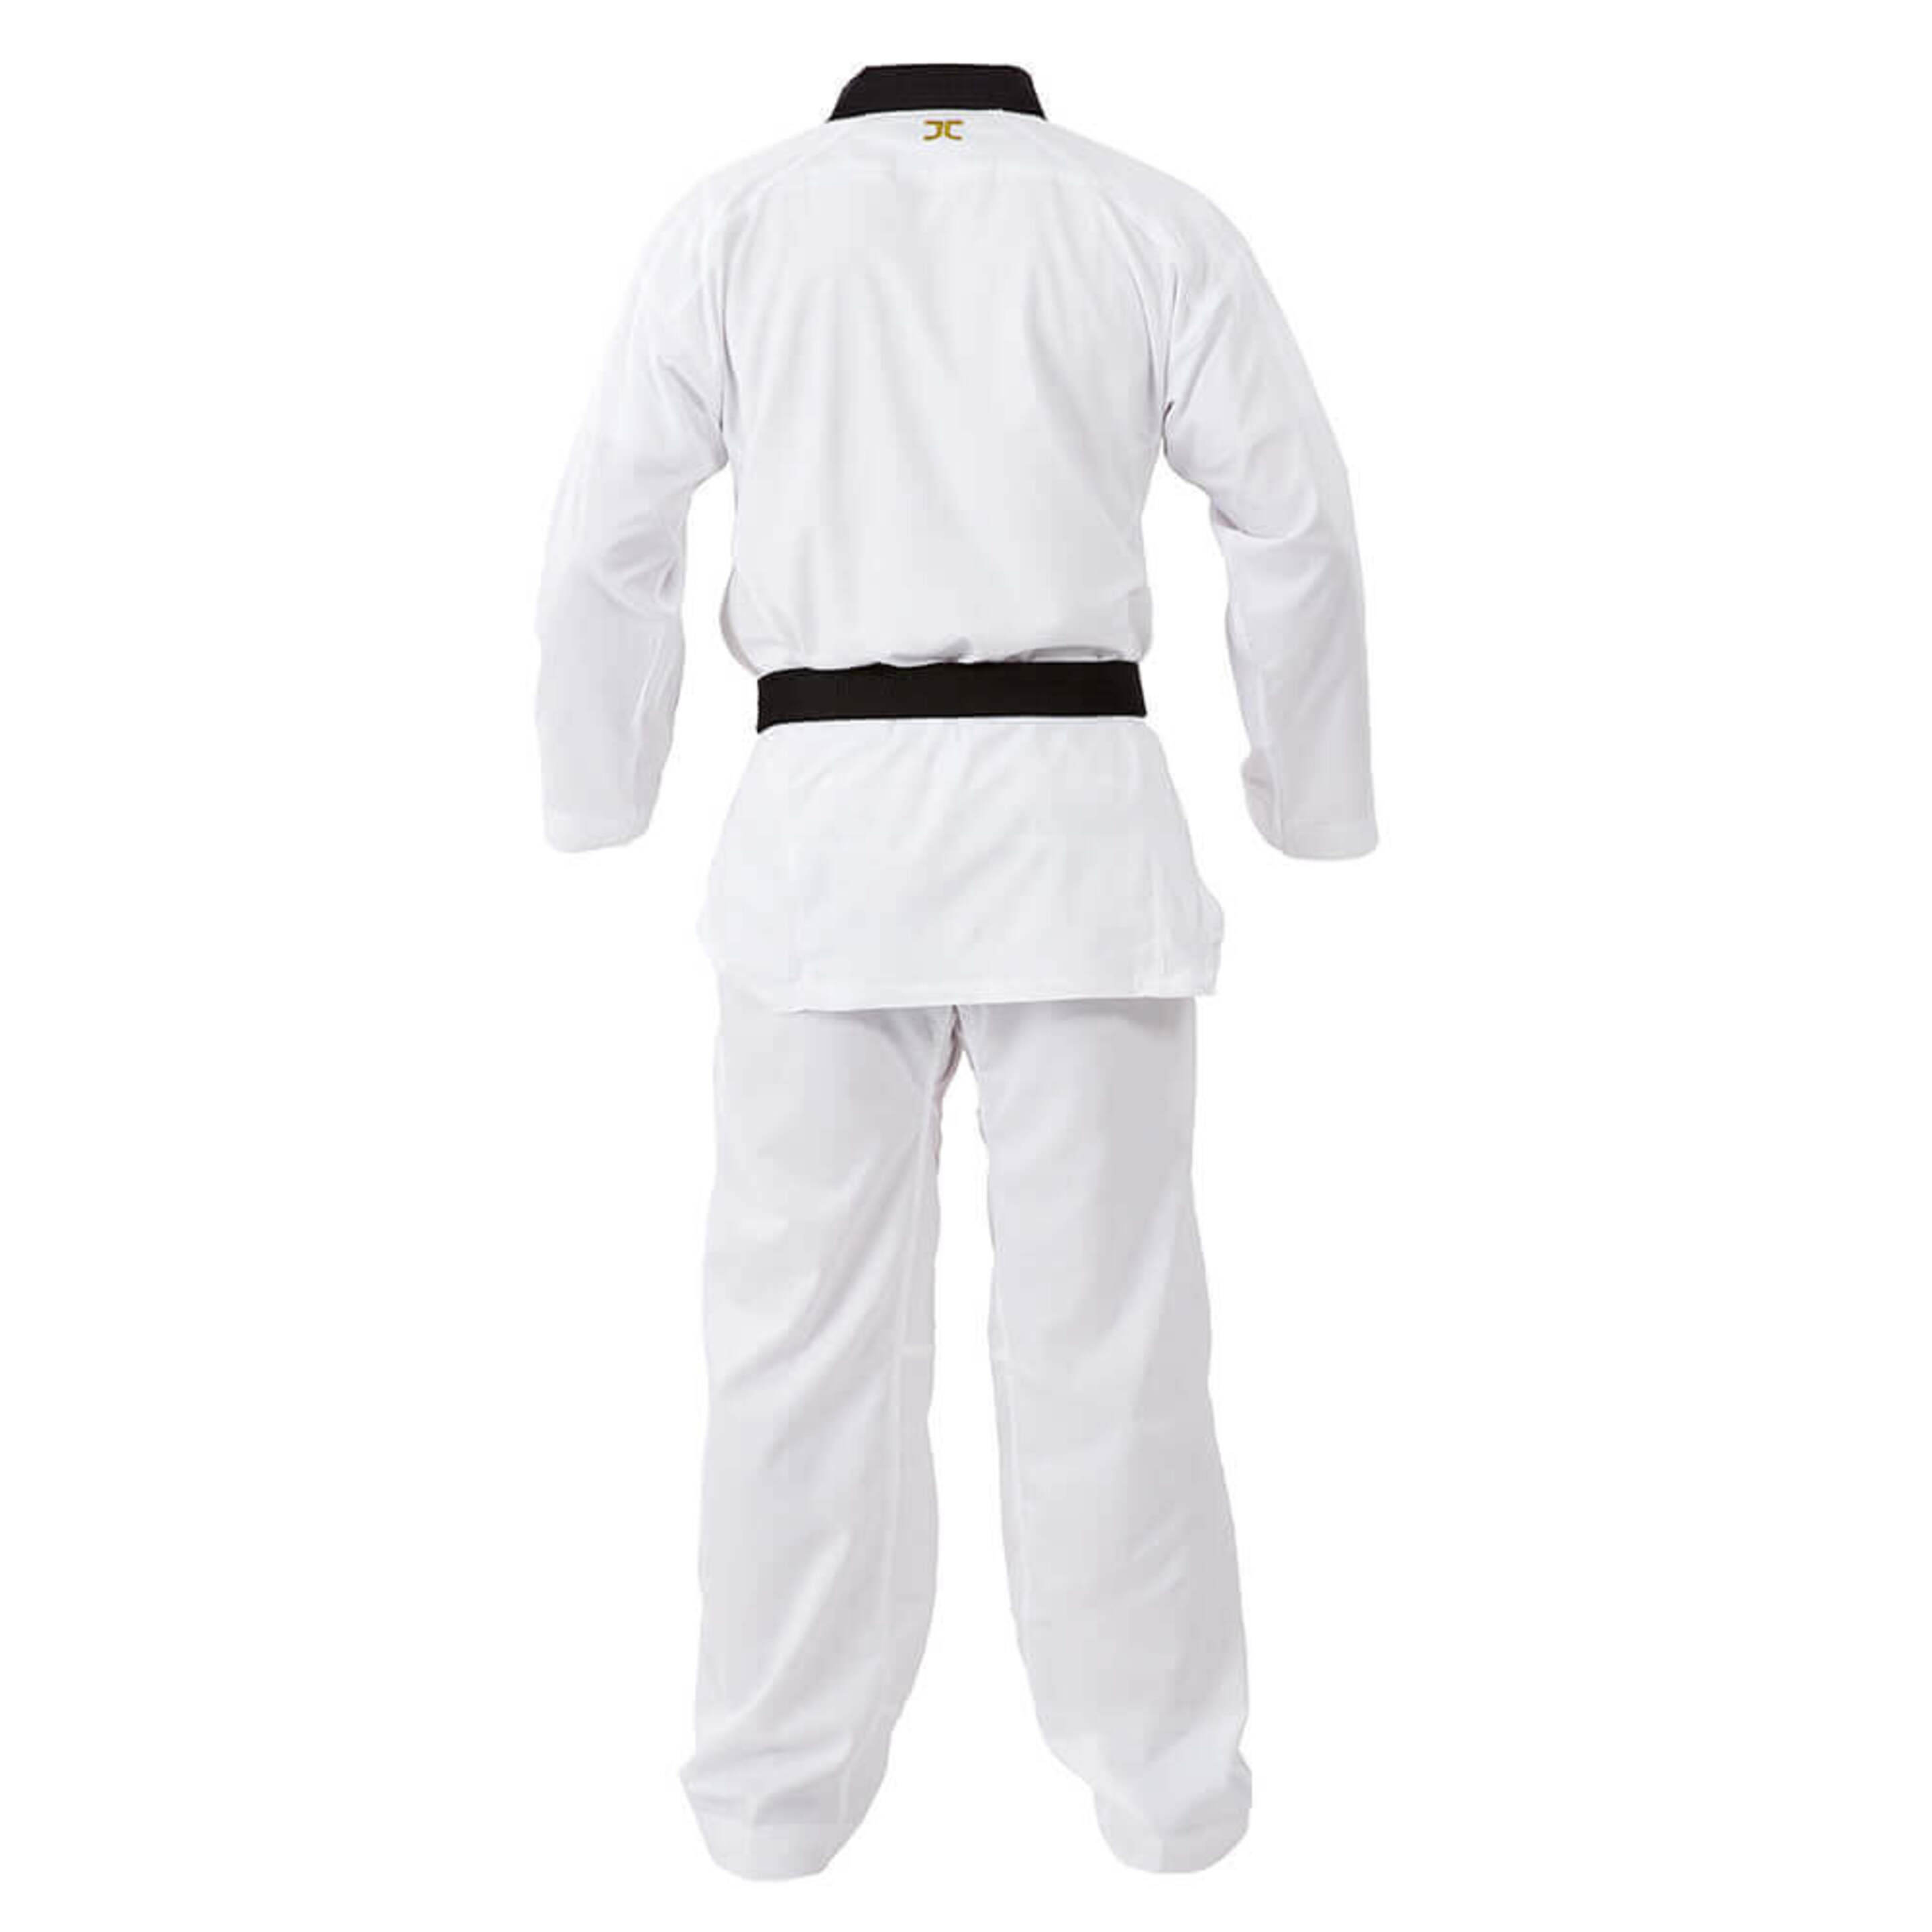 Fato De Taekwondo Jcalicu Vortex Fighter Ii - Branco | Sport Zone MKP